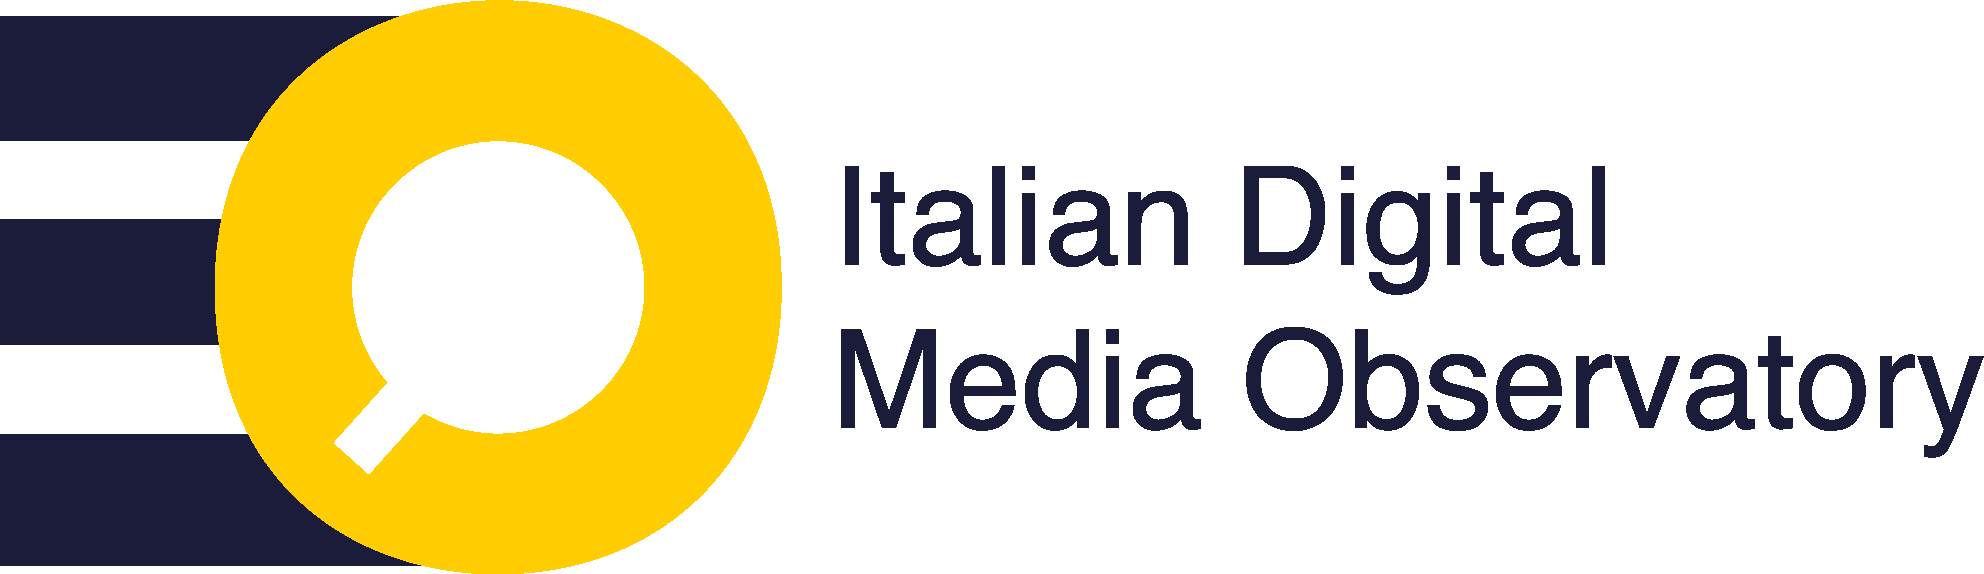 Italian Digital Media Observatory - IDMO